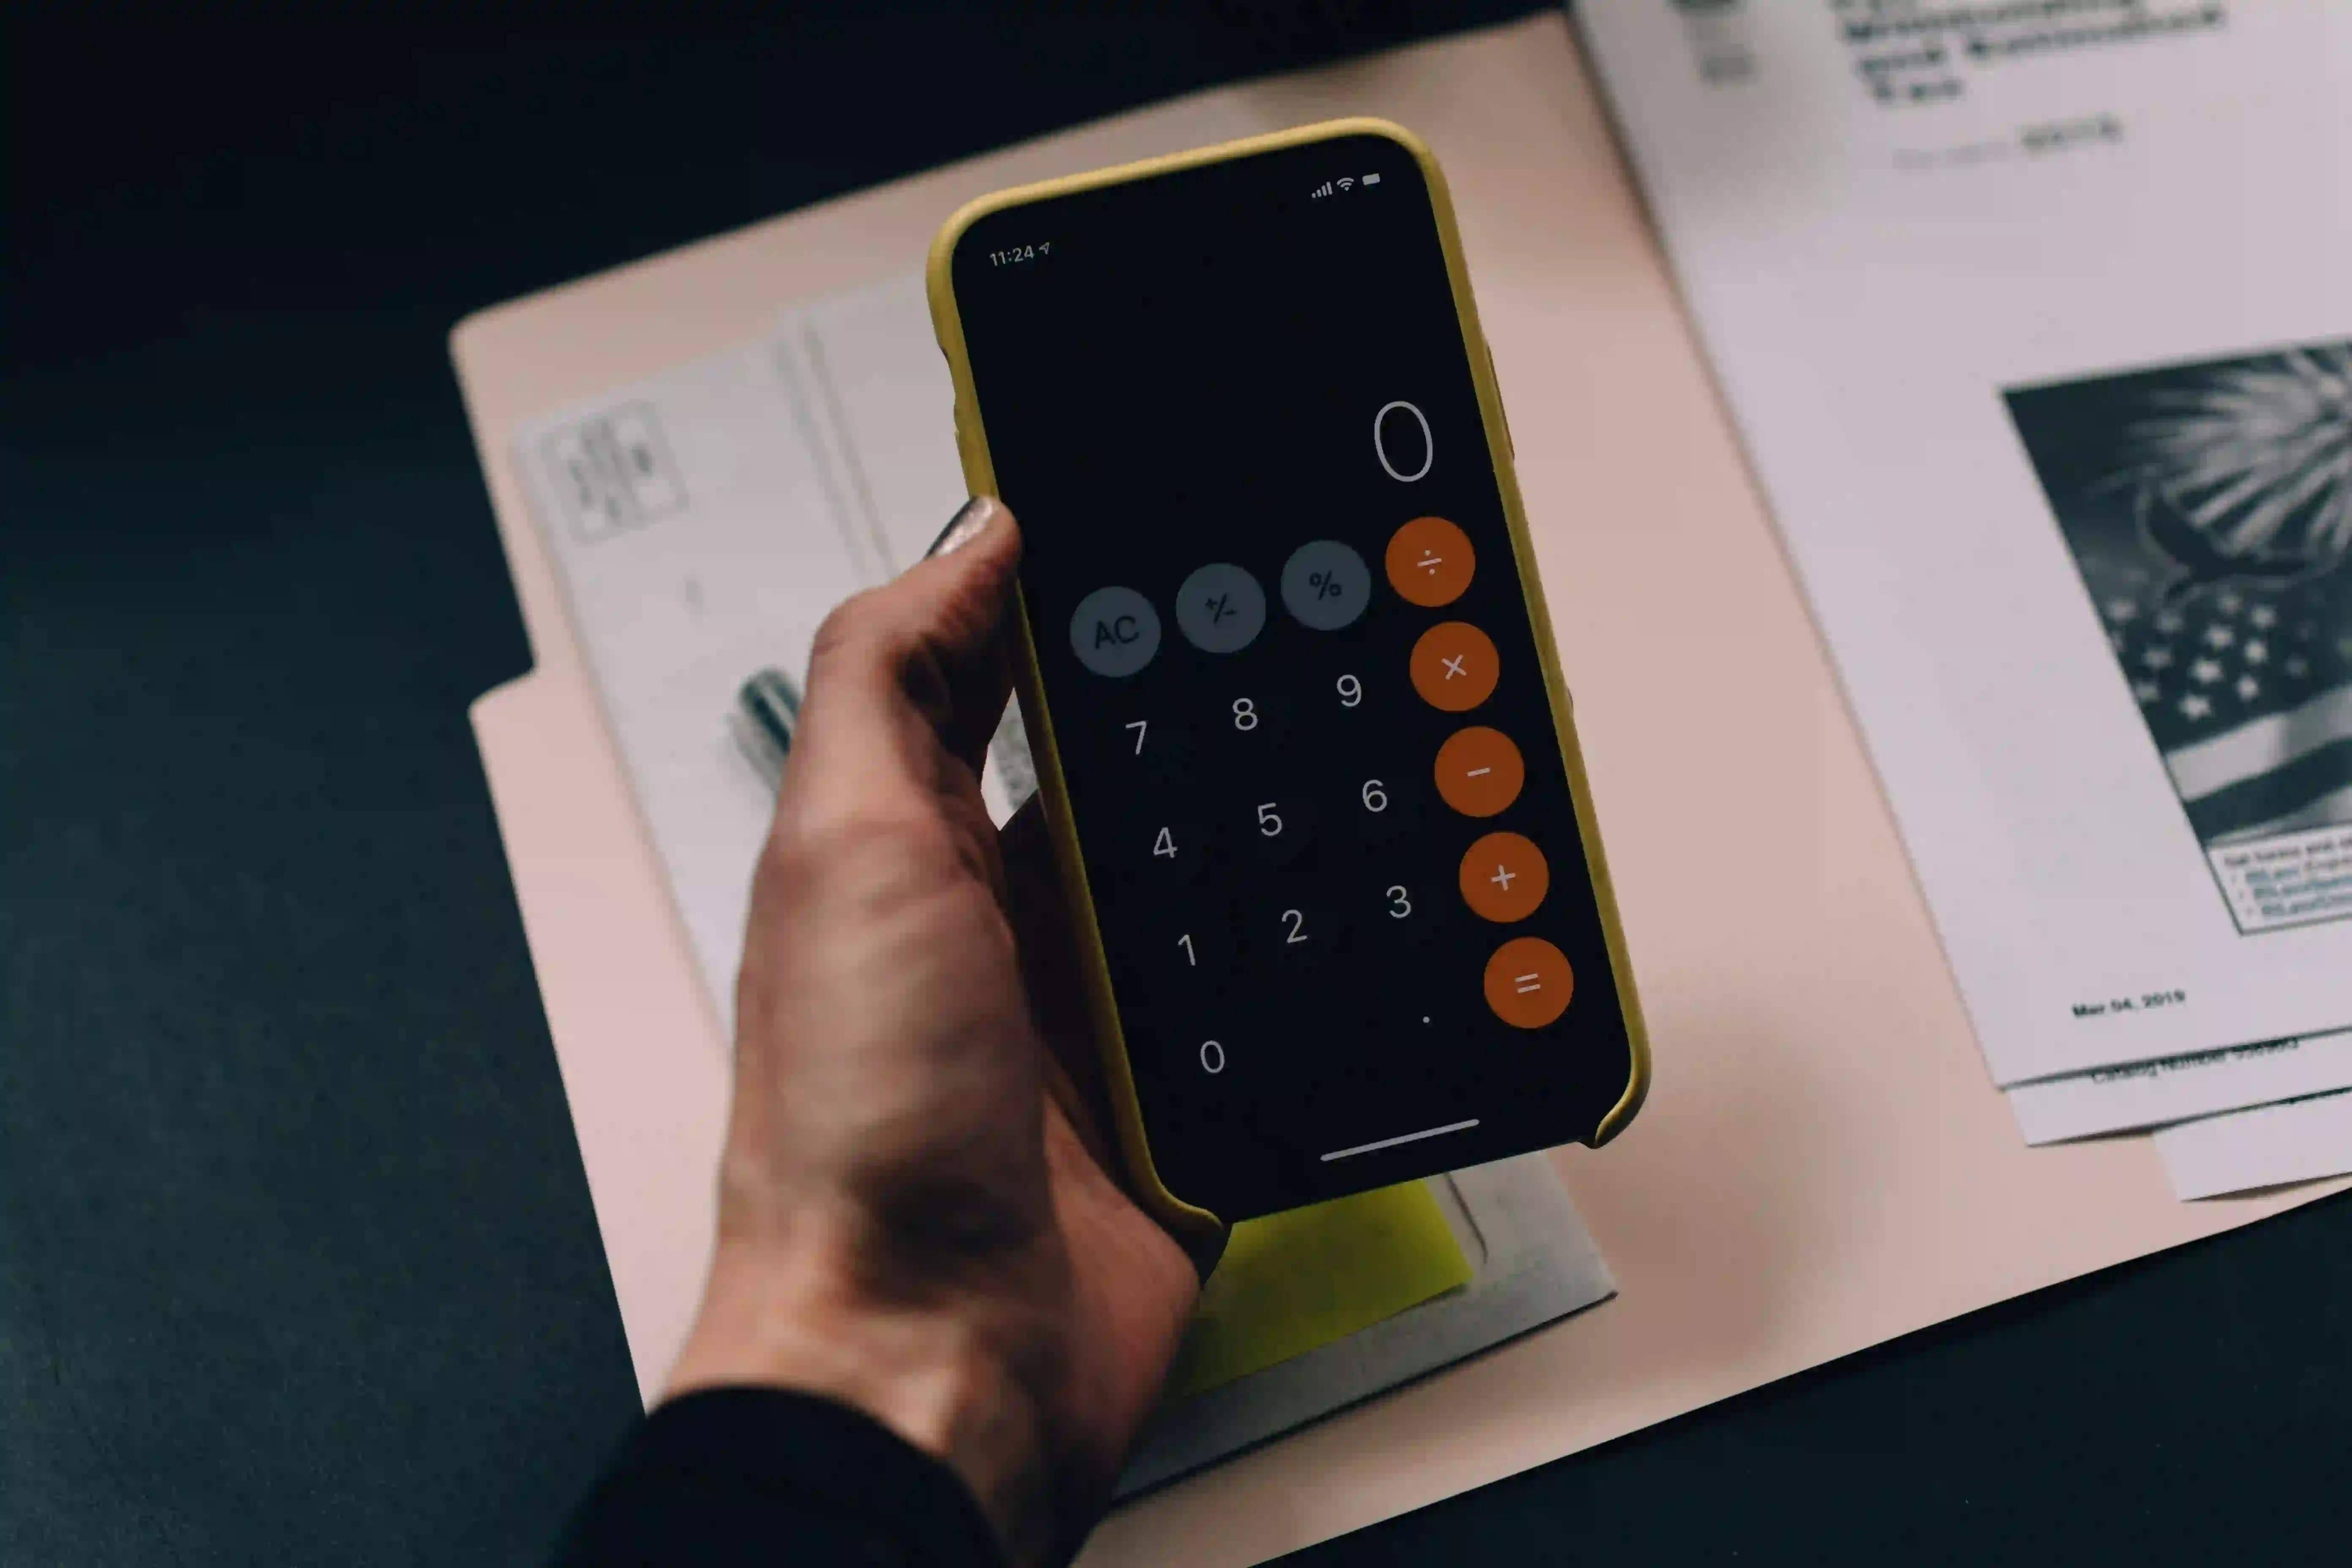 Iphone held in left hand with calculator app opened